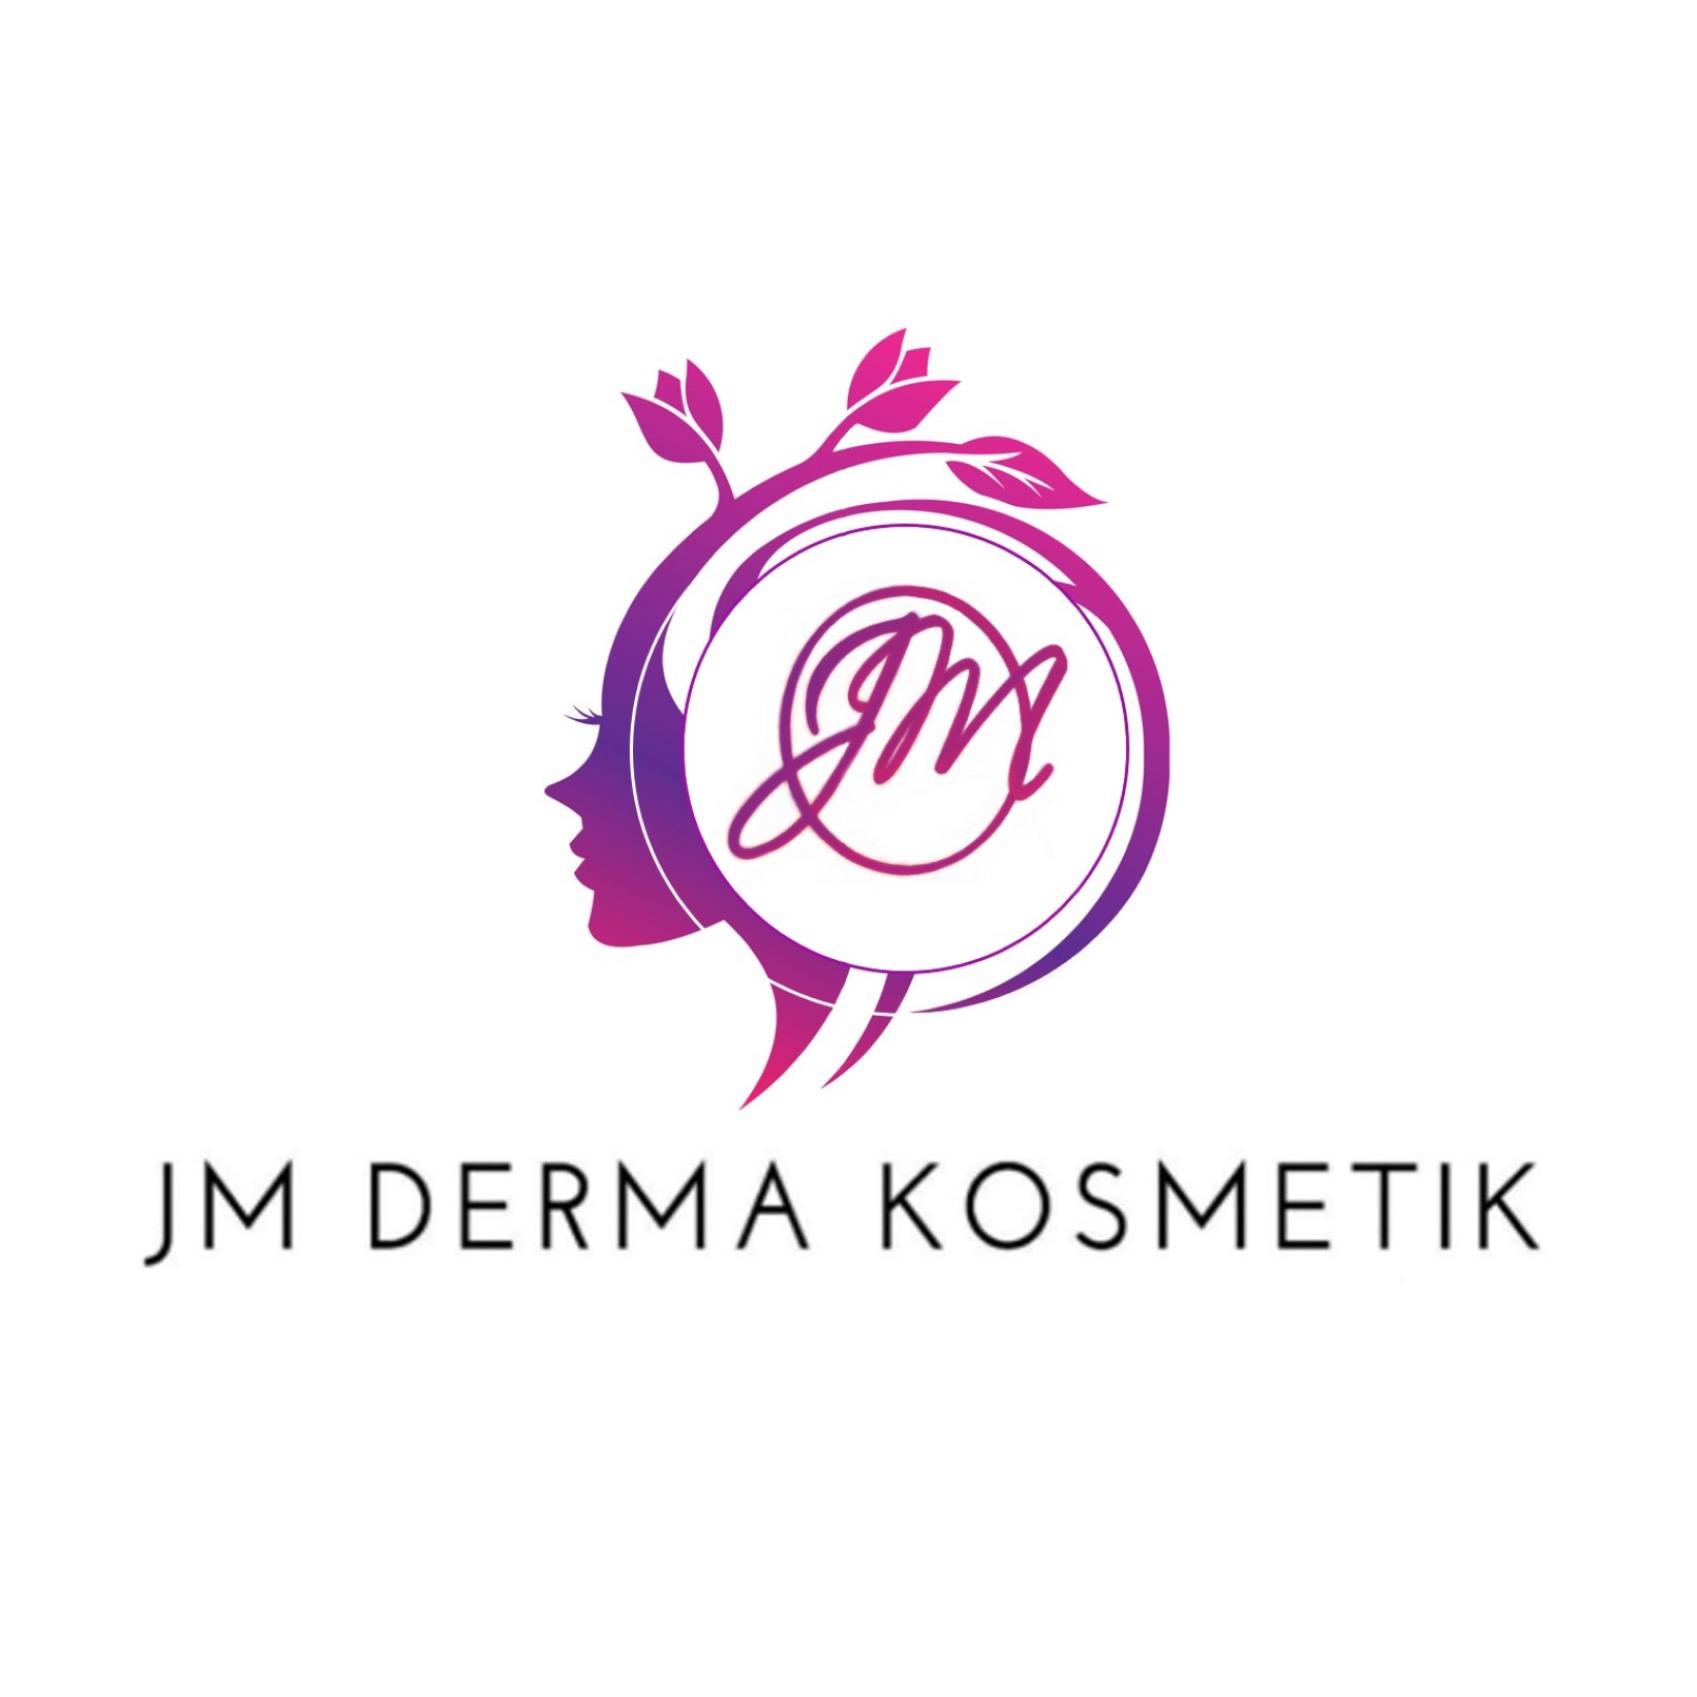 JM Derma Kosmetik, Inh. Jennifer Mendes - Beauty Salon - Leipzig - 0172 3946051 Germany | ShowMeLocal.com